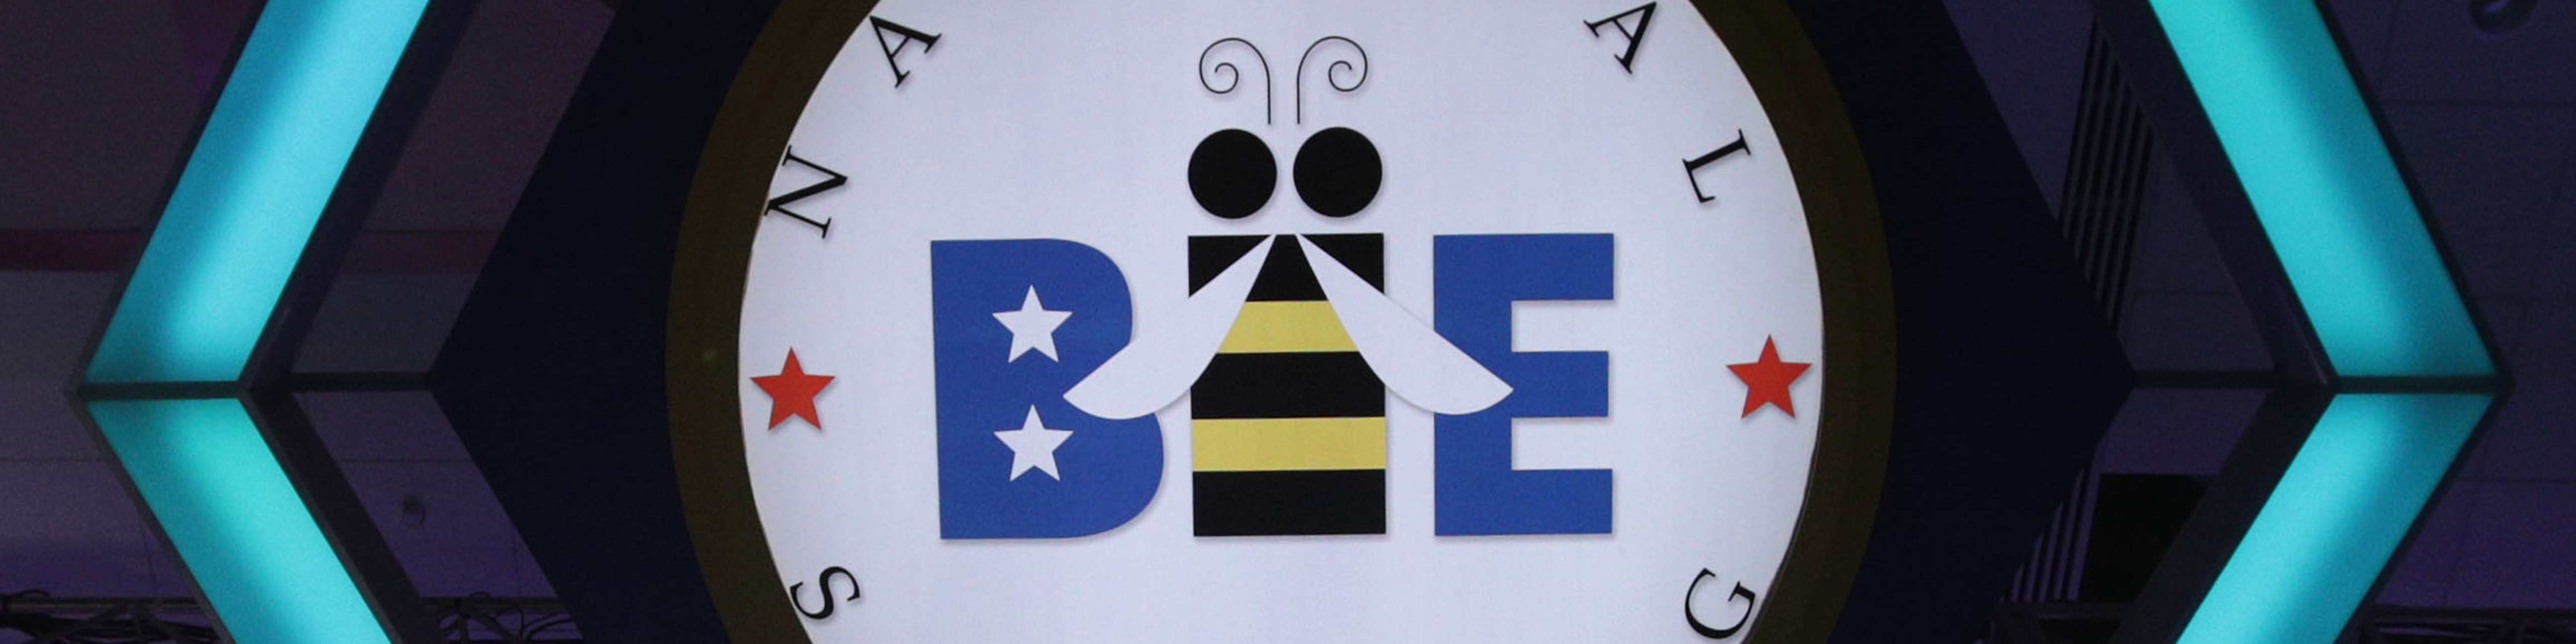 Scripps national spelling bee logo